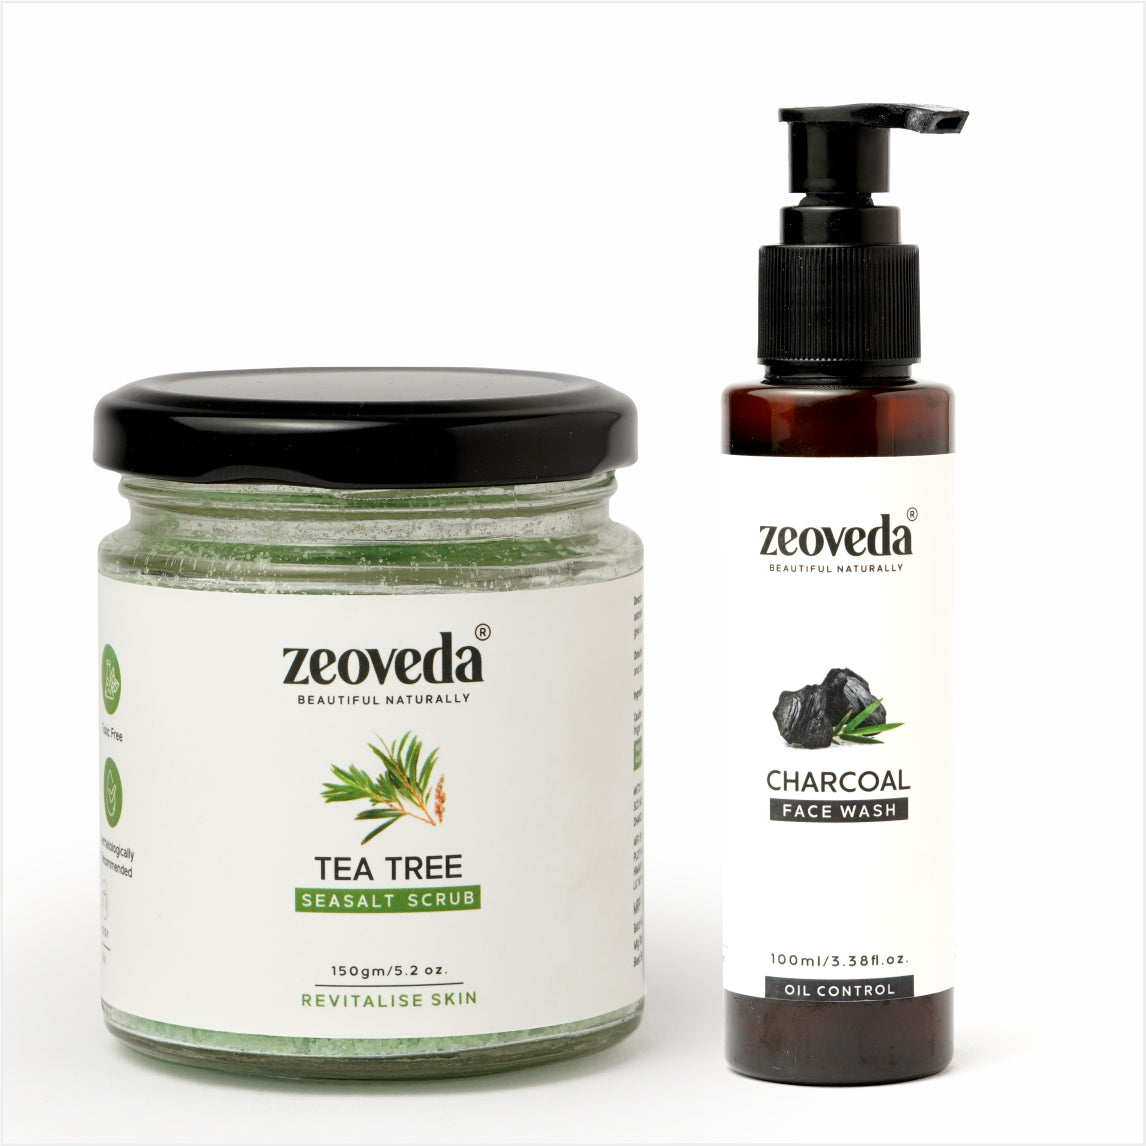 Tea Tree Scrub(150GM) + Charcoal Face Wash(100ML) Combo For Acne Prone & Oily Skin